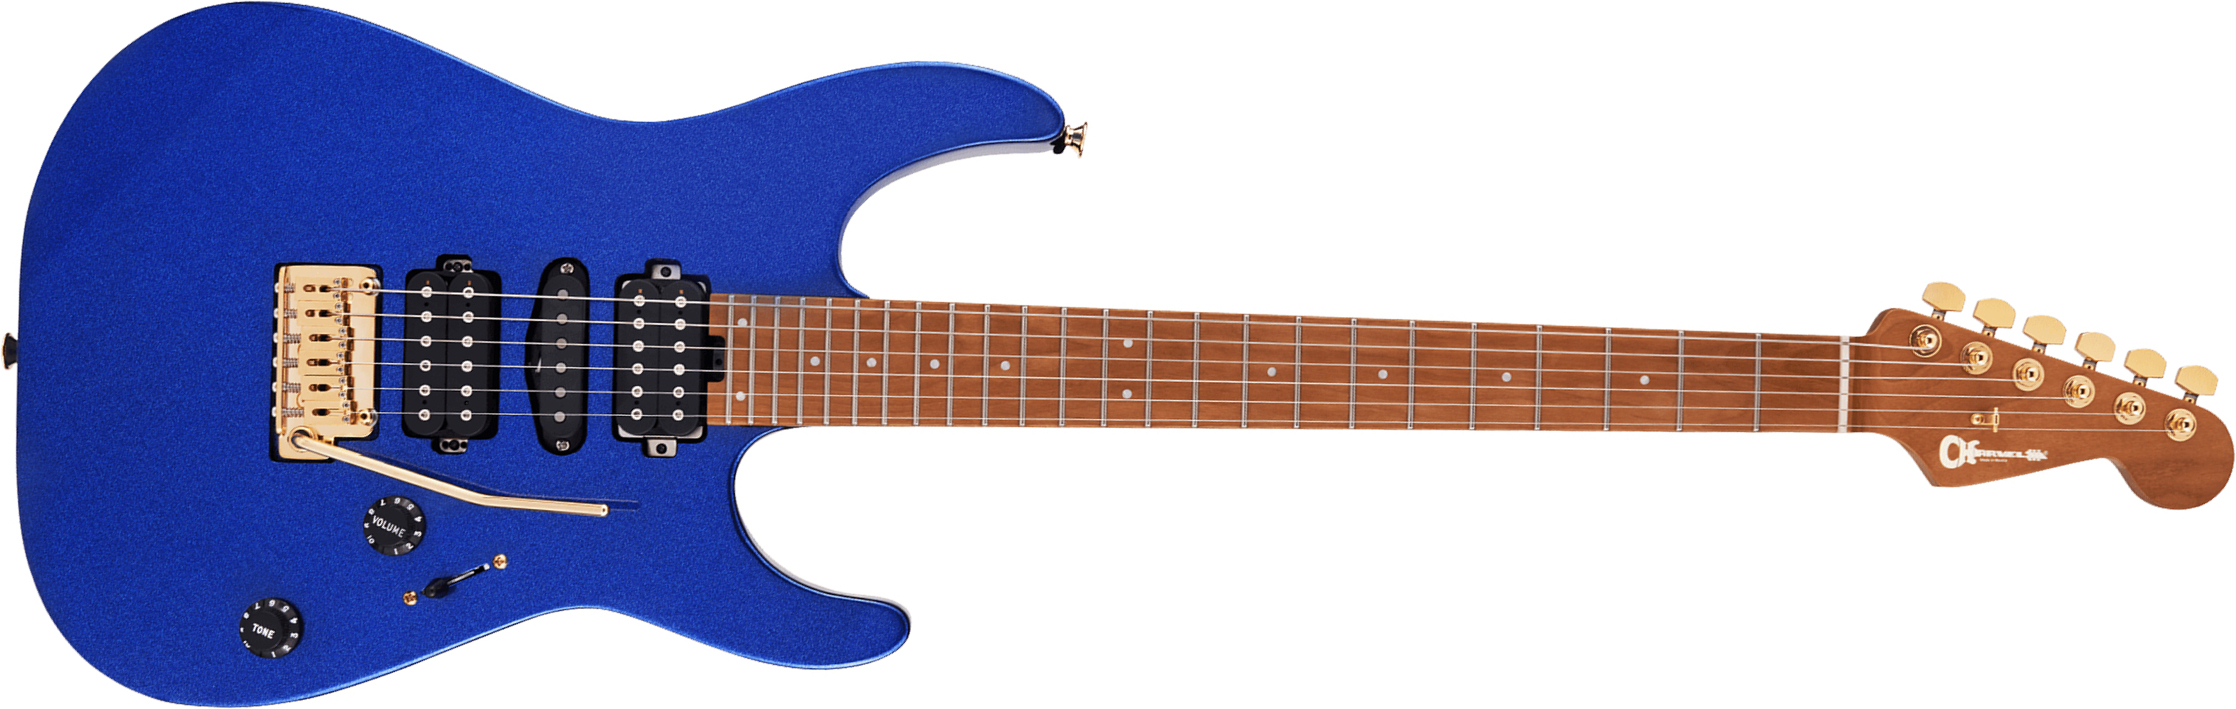 Charvel Dinky Dk24 Hsh 2pt Cm Pro-mod Seymour Duncan Trem Mn - Mystic Blue - Elektrische gitaar in Str-vorm - Main picture